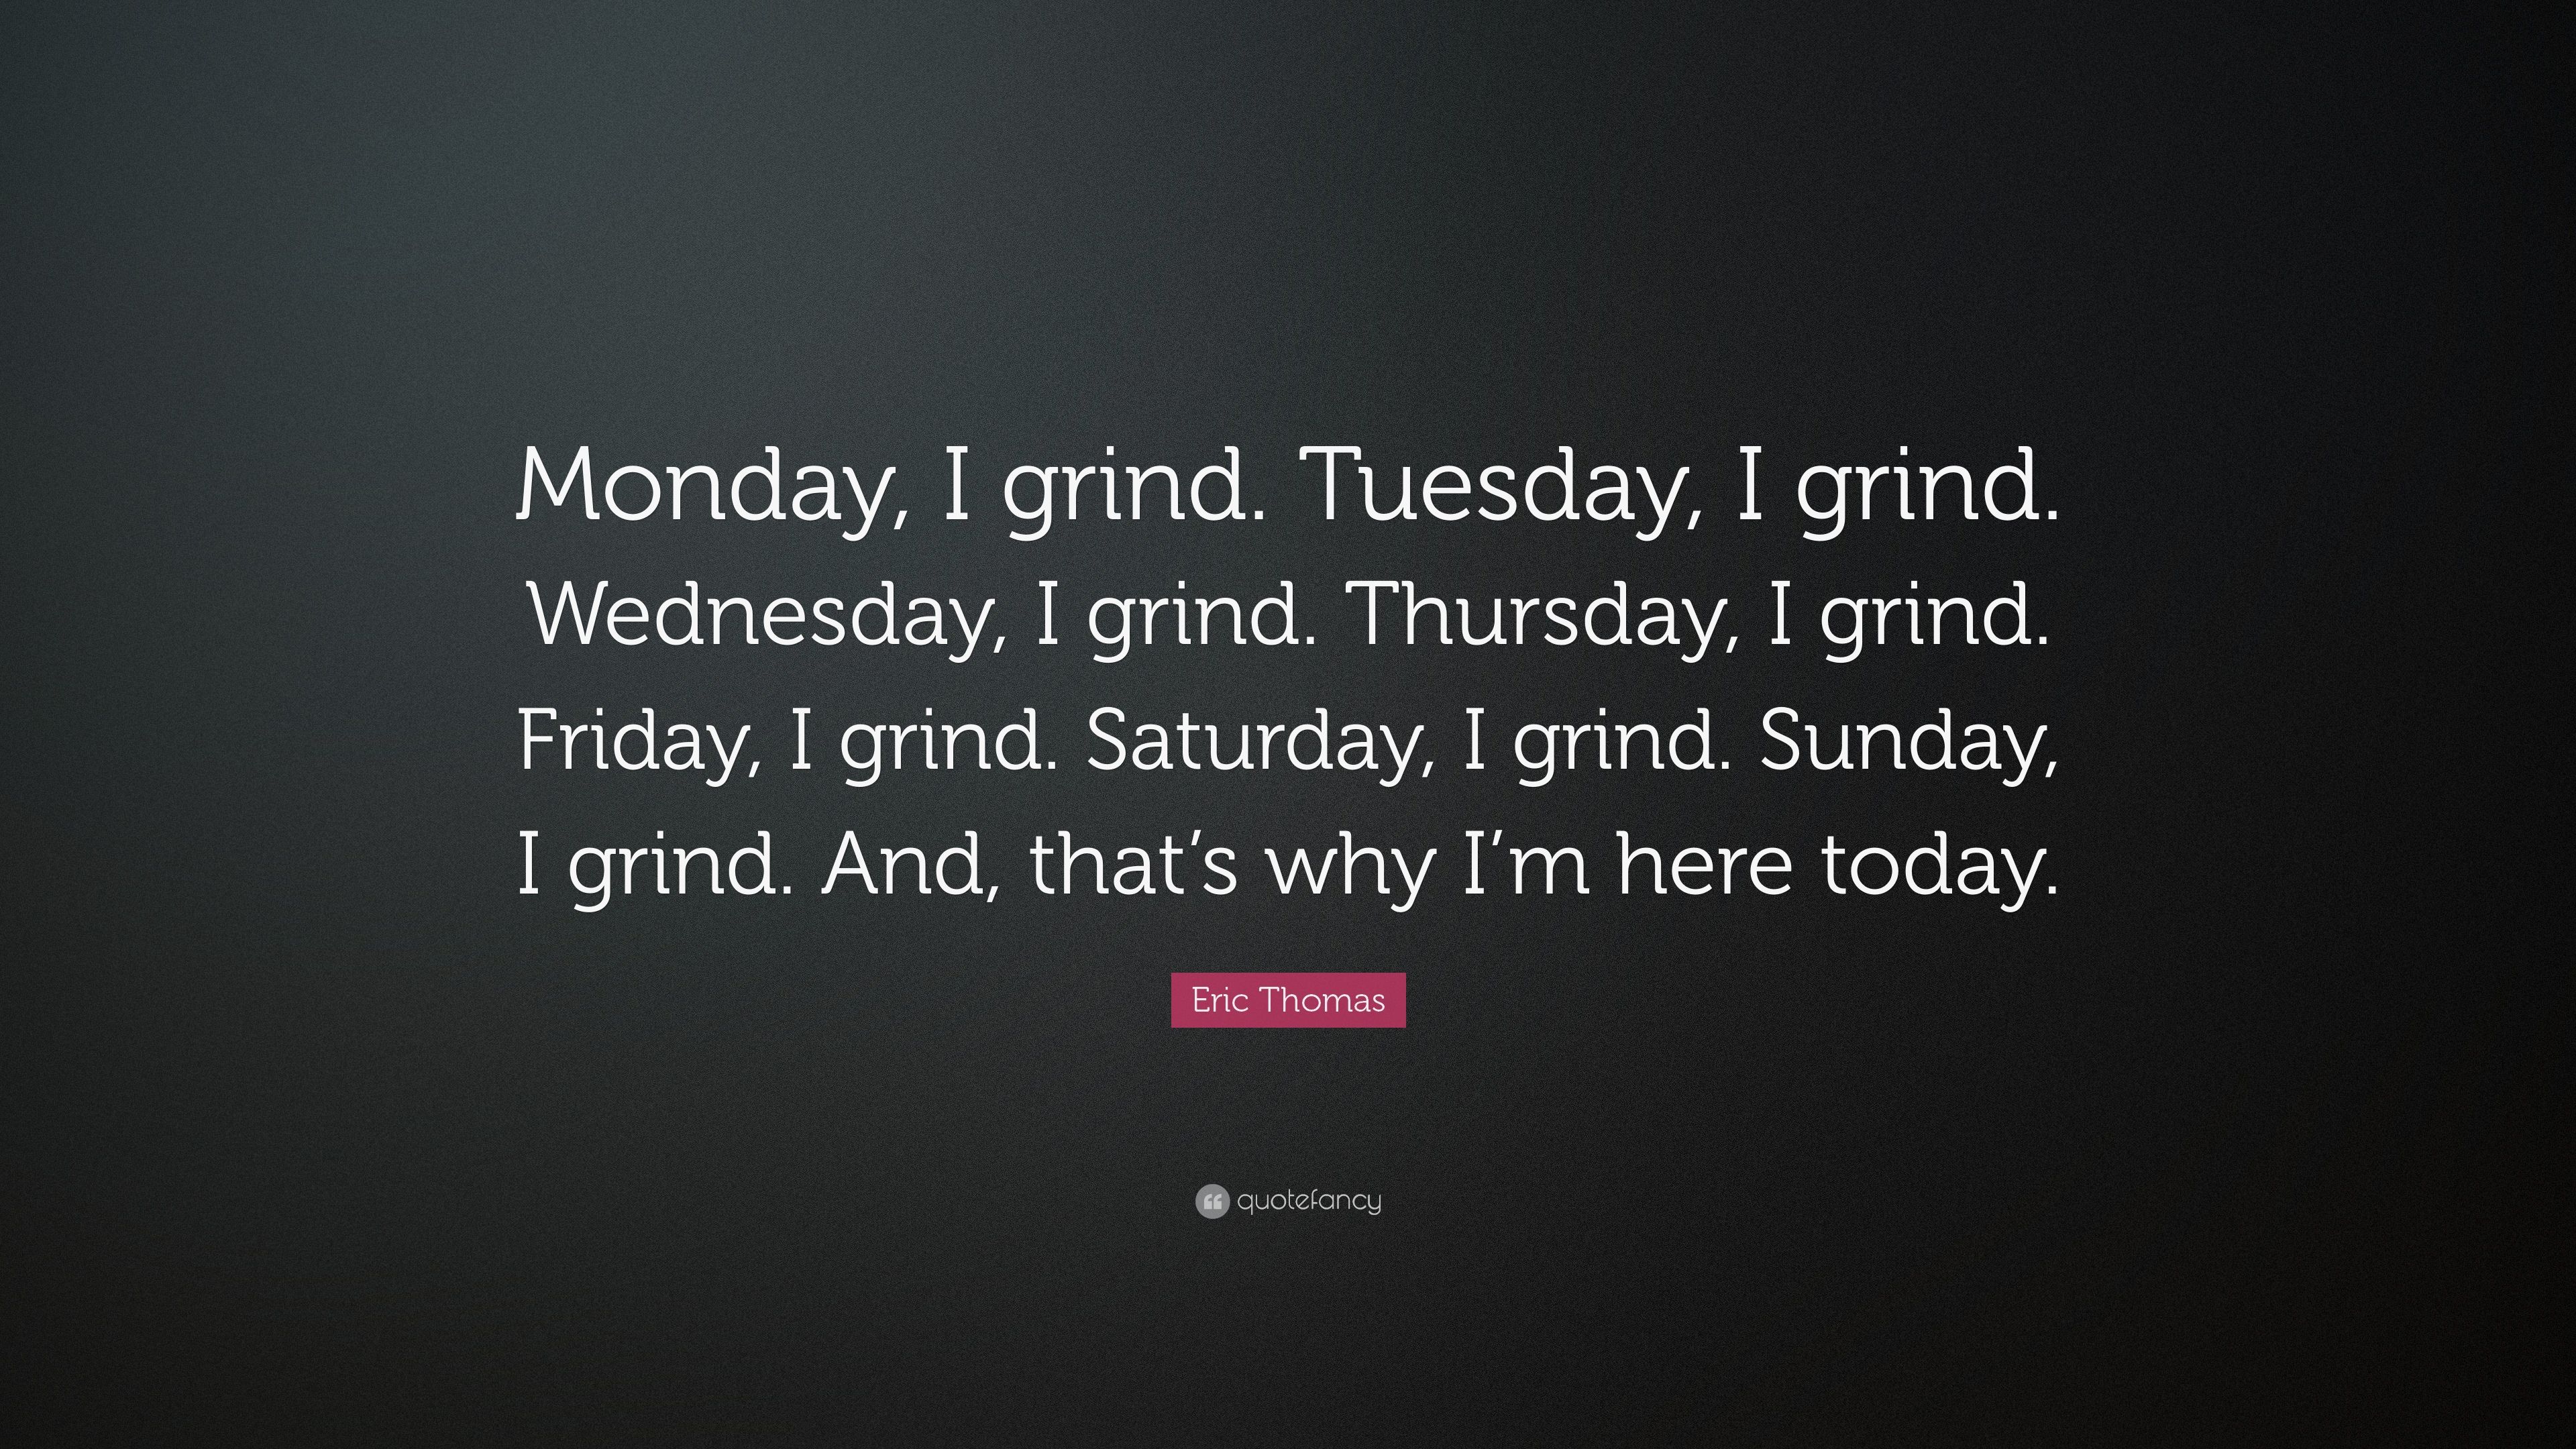 Eric Thomas Quote: “Monday, I grind. Tuesday, I grind. Wednesday